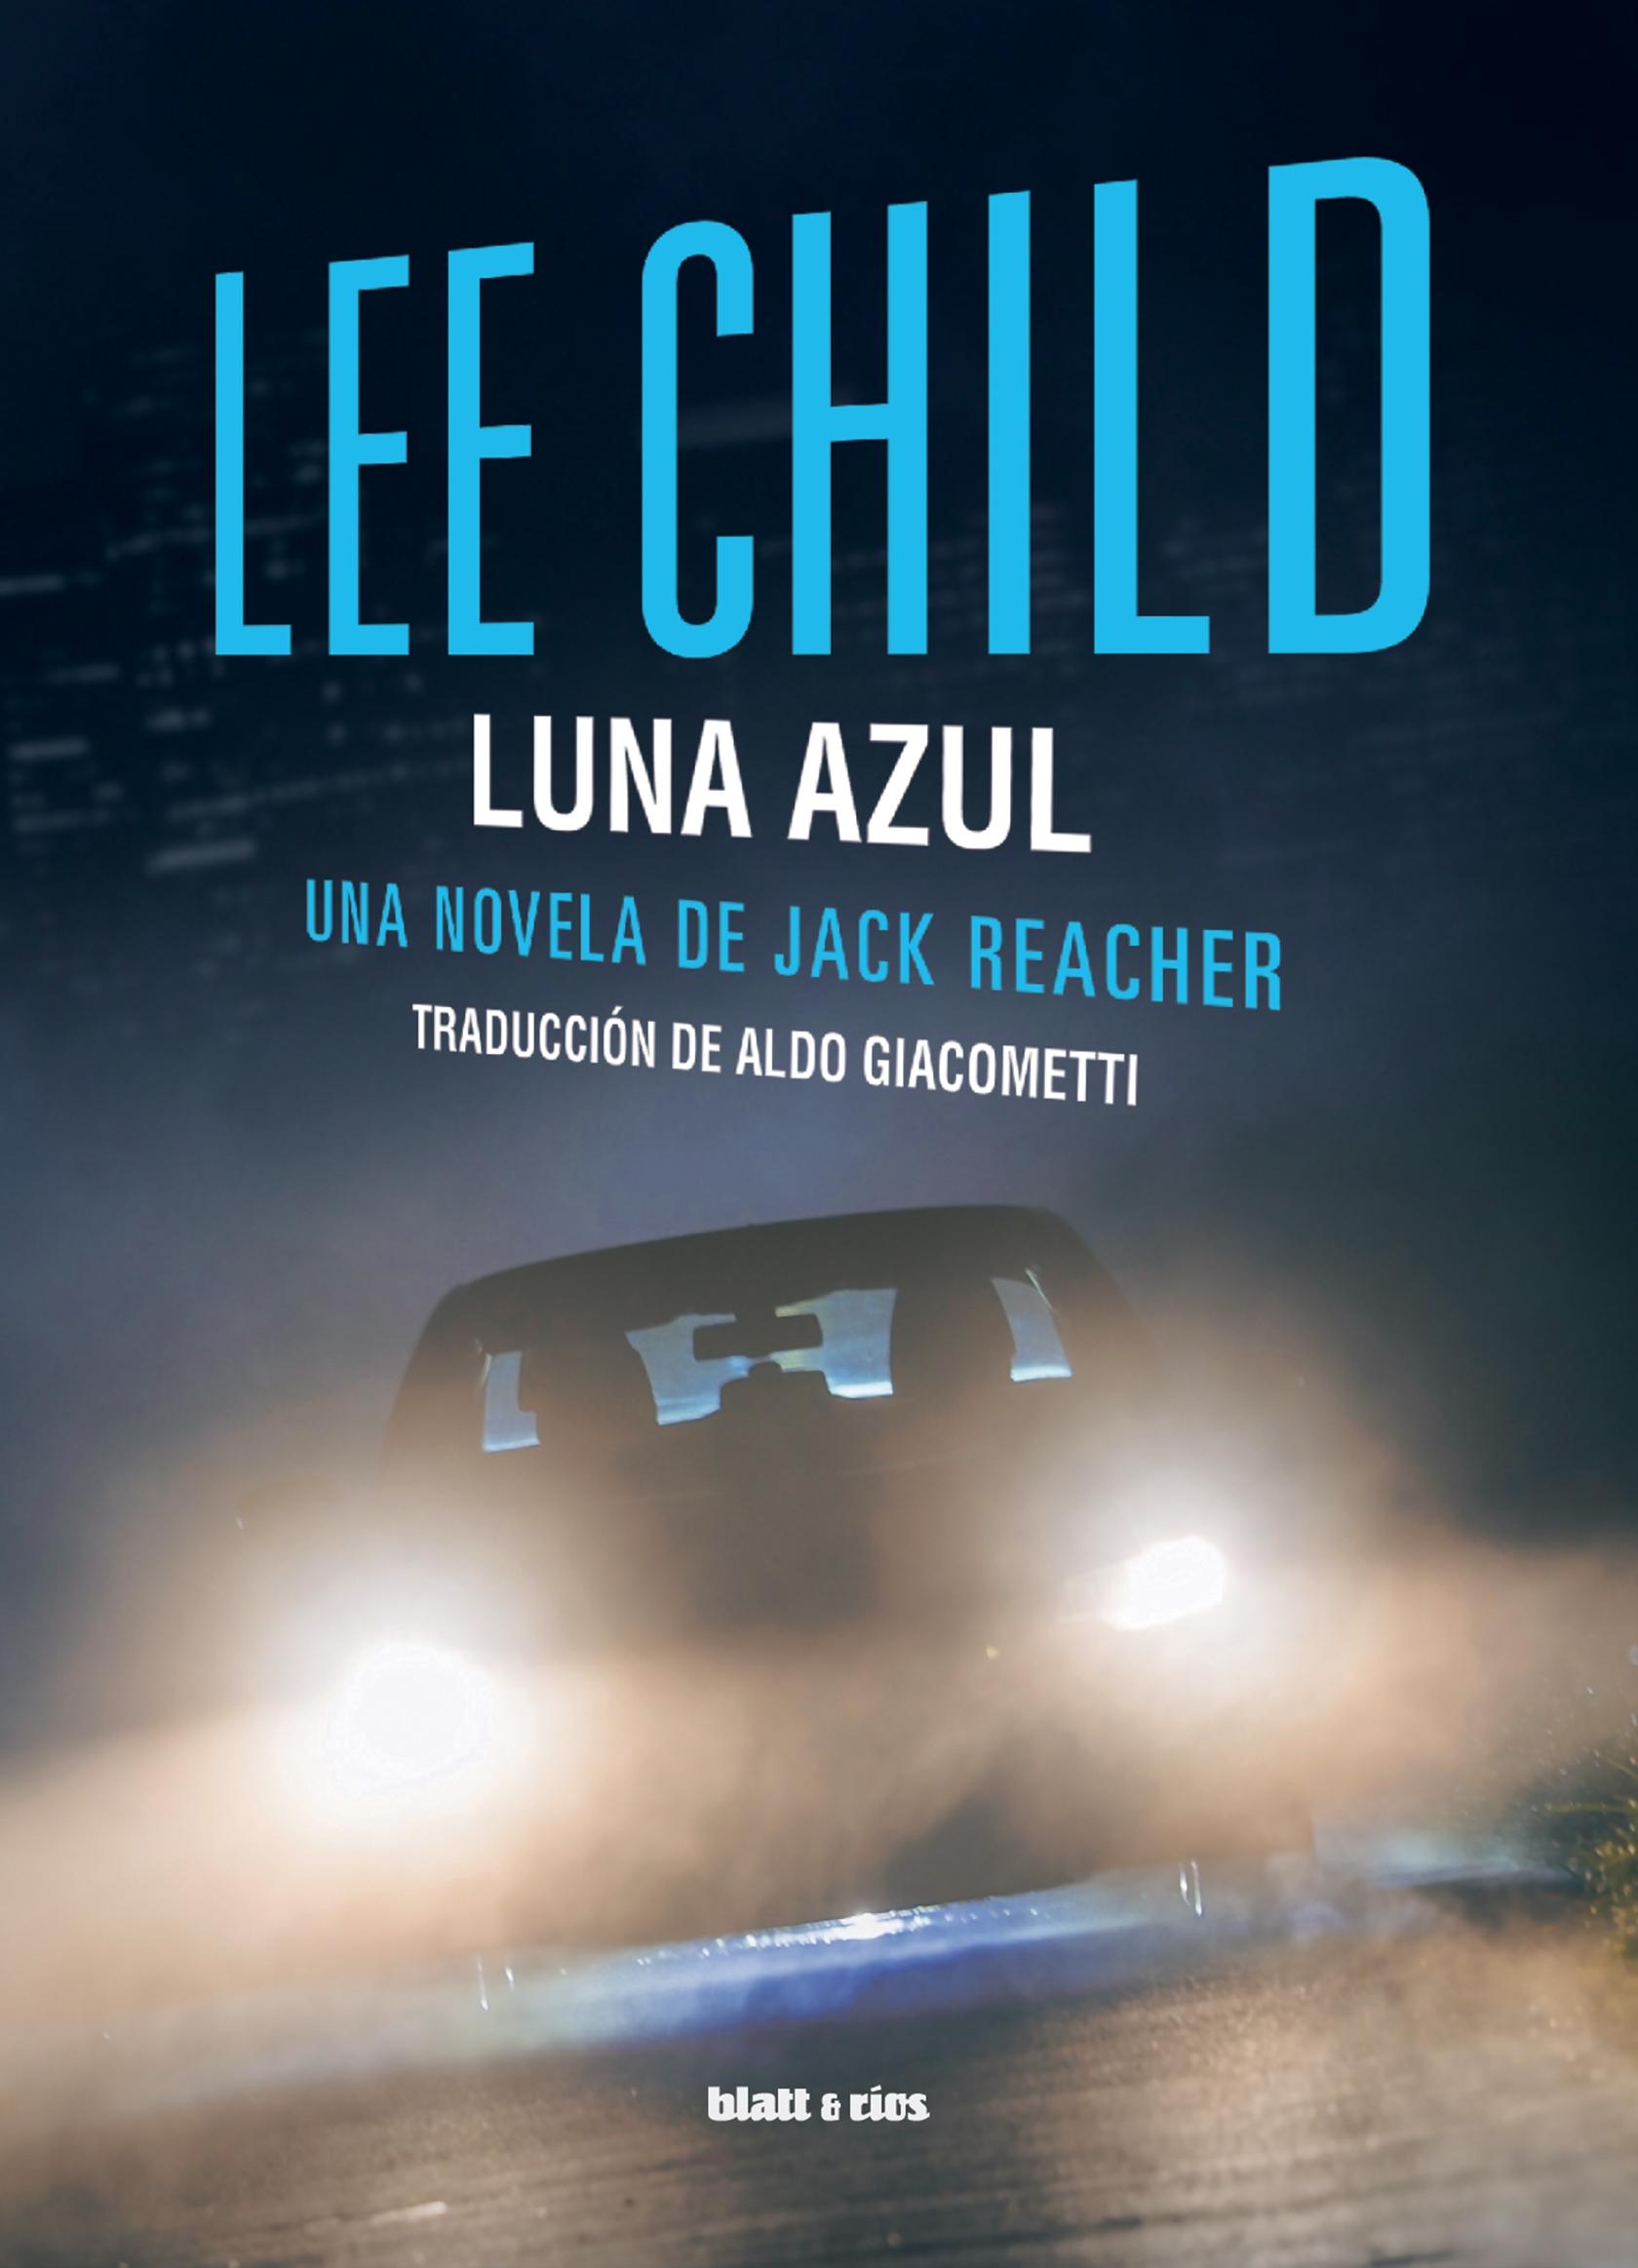 Luna azul "(Una novela de Jack Reacher - 24)". 